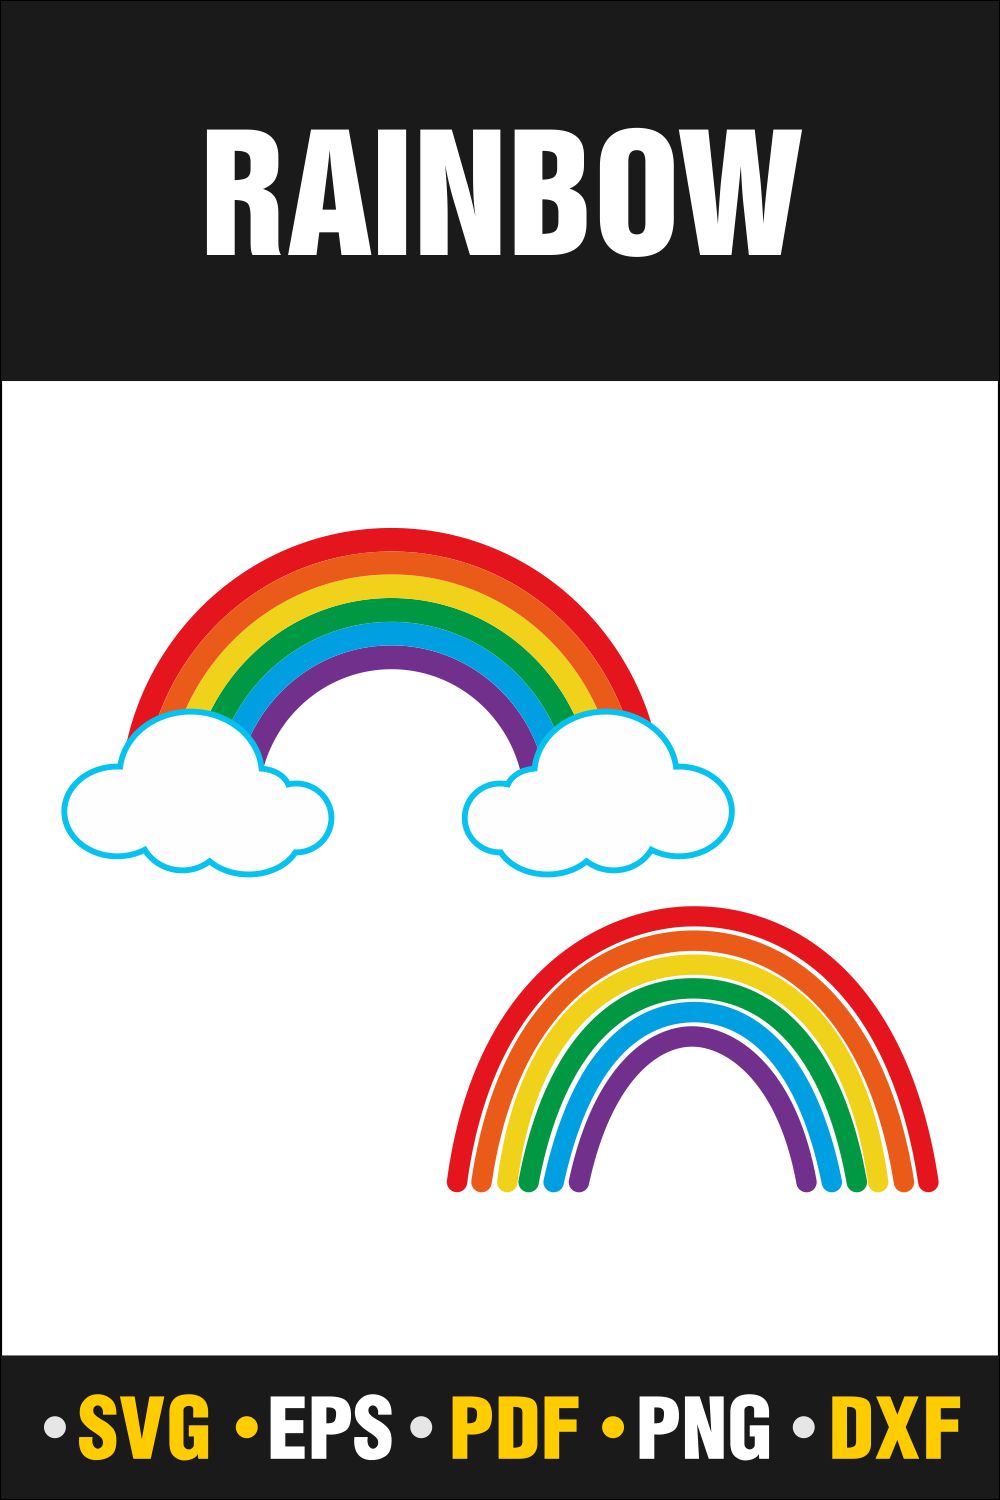 Rainbow Svg, Rainbow Frame Svg, Pride SVG, Vector Cut file Cricut, Silhouette, Pdf Png, Dxf, Decal, Sticker, Stencil, Vinyl pinterest preview image.